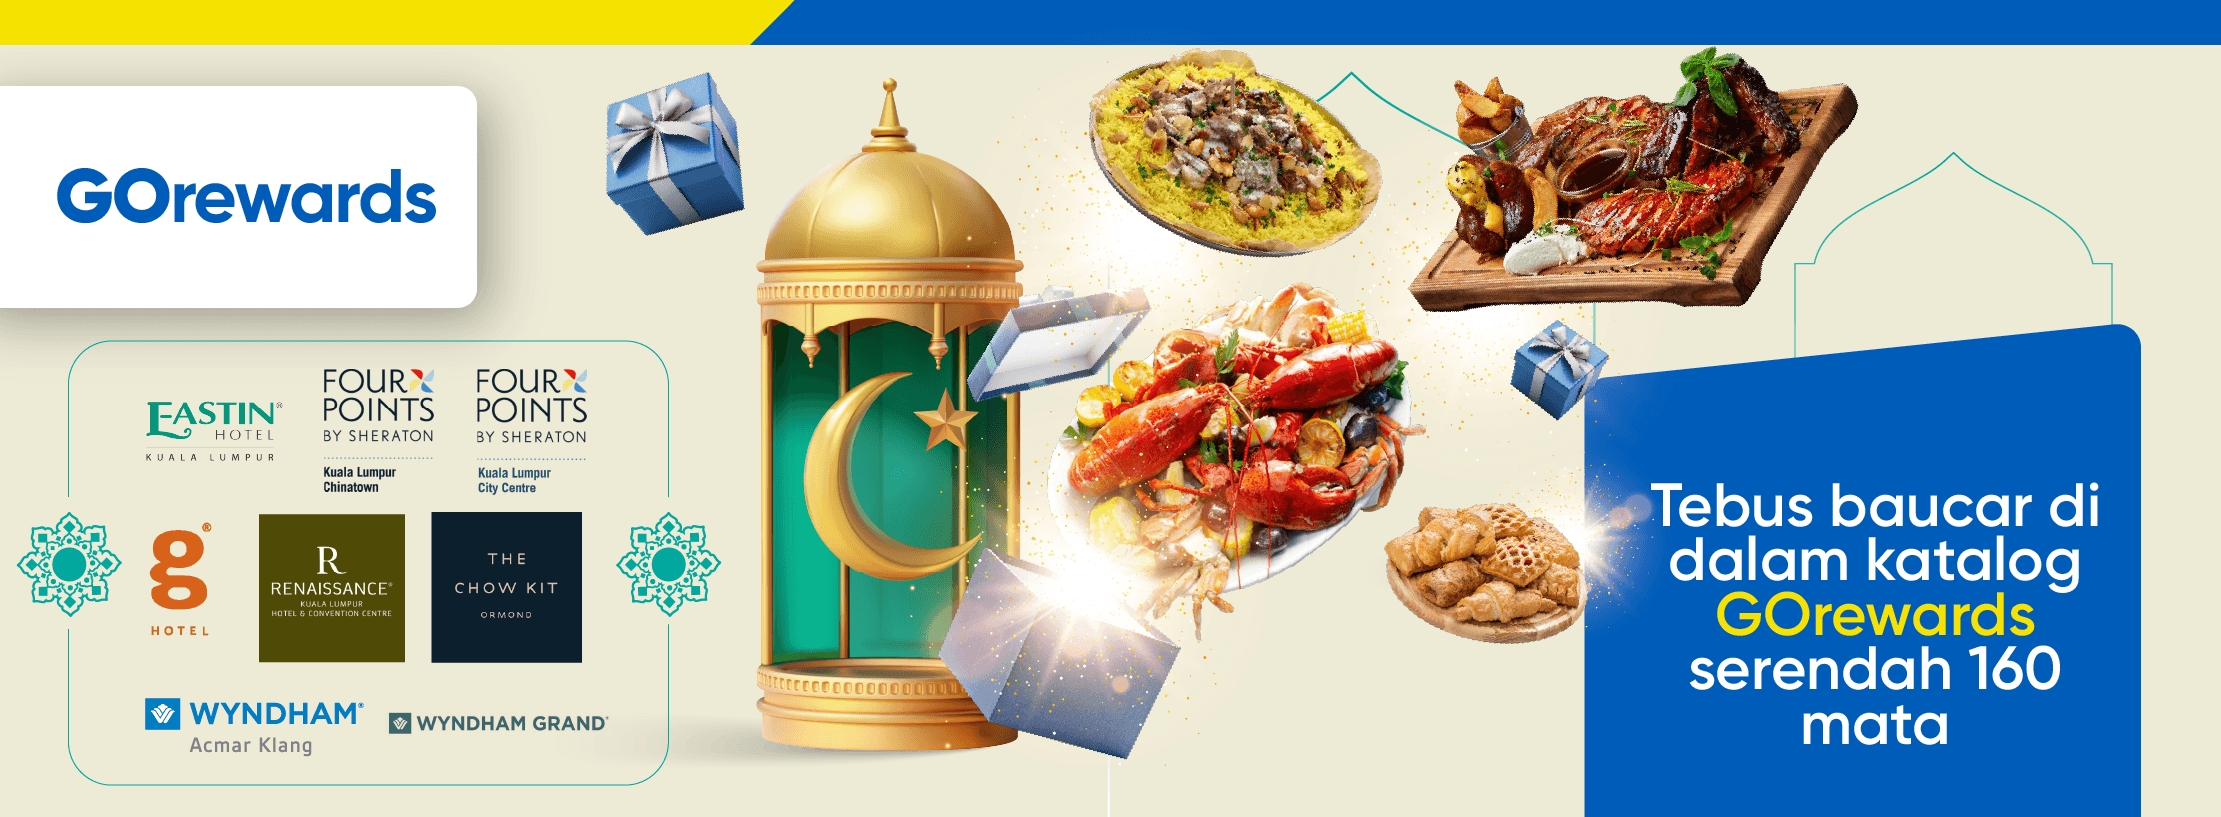 web-banner-ramadan-BM.jpg